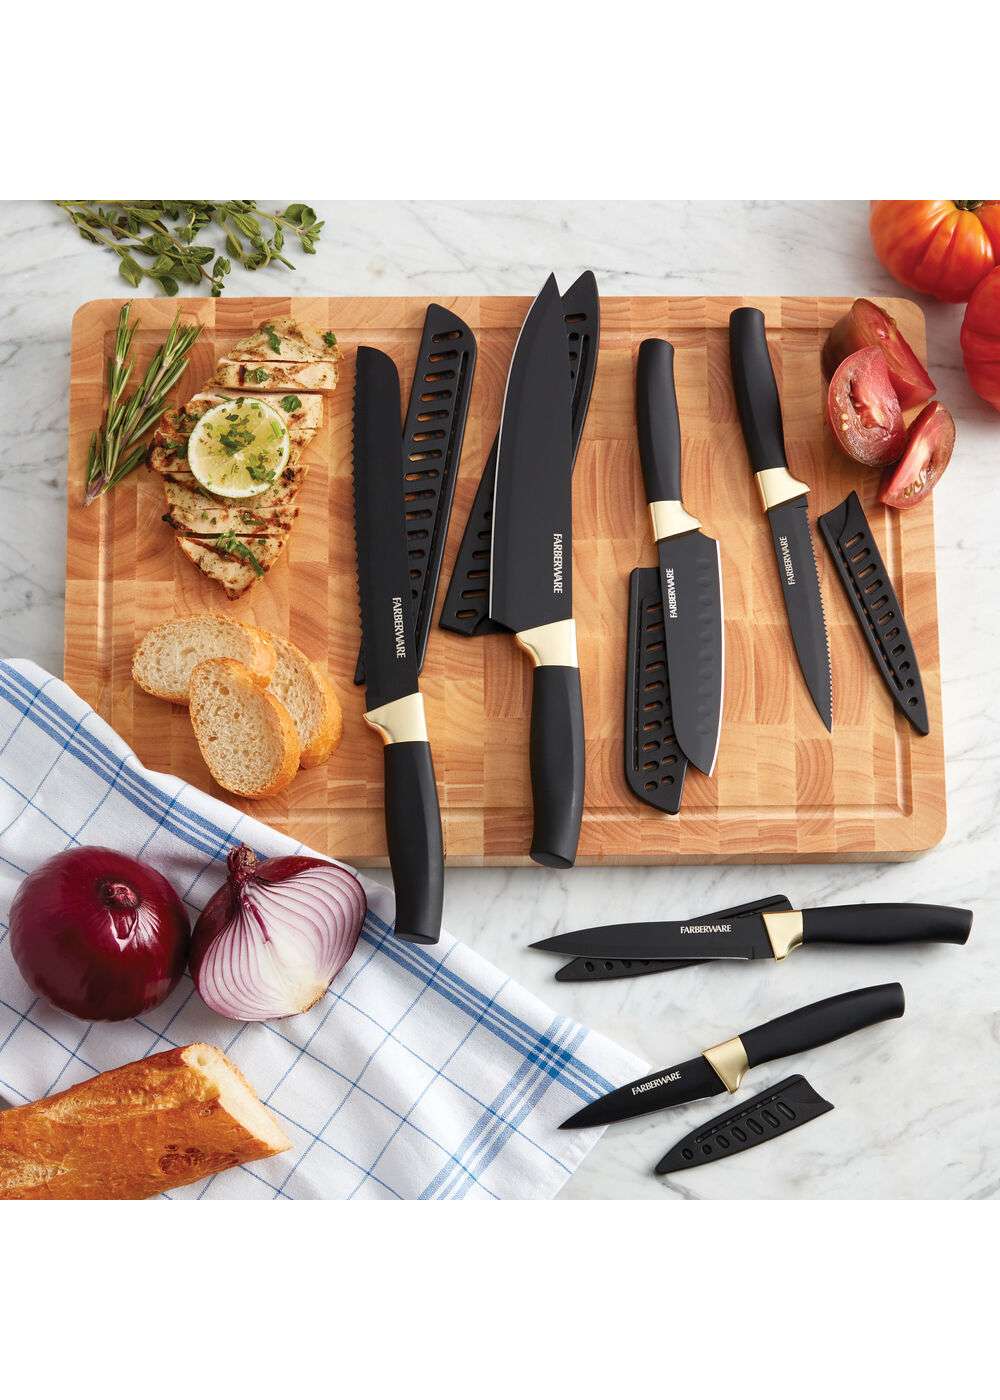 Farberware Stainless Steel Chef Knife Set, 3 Piece, Black